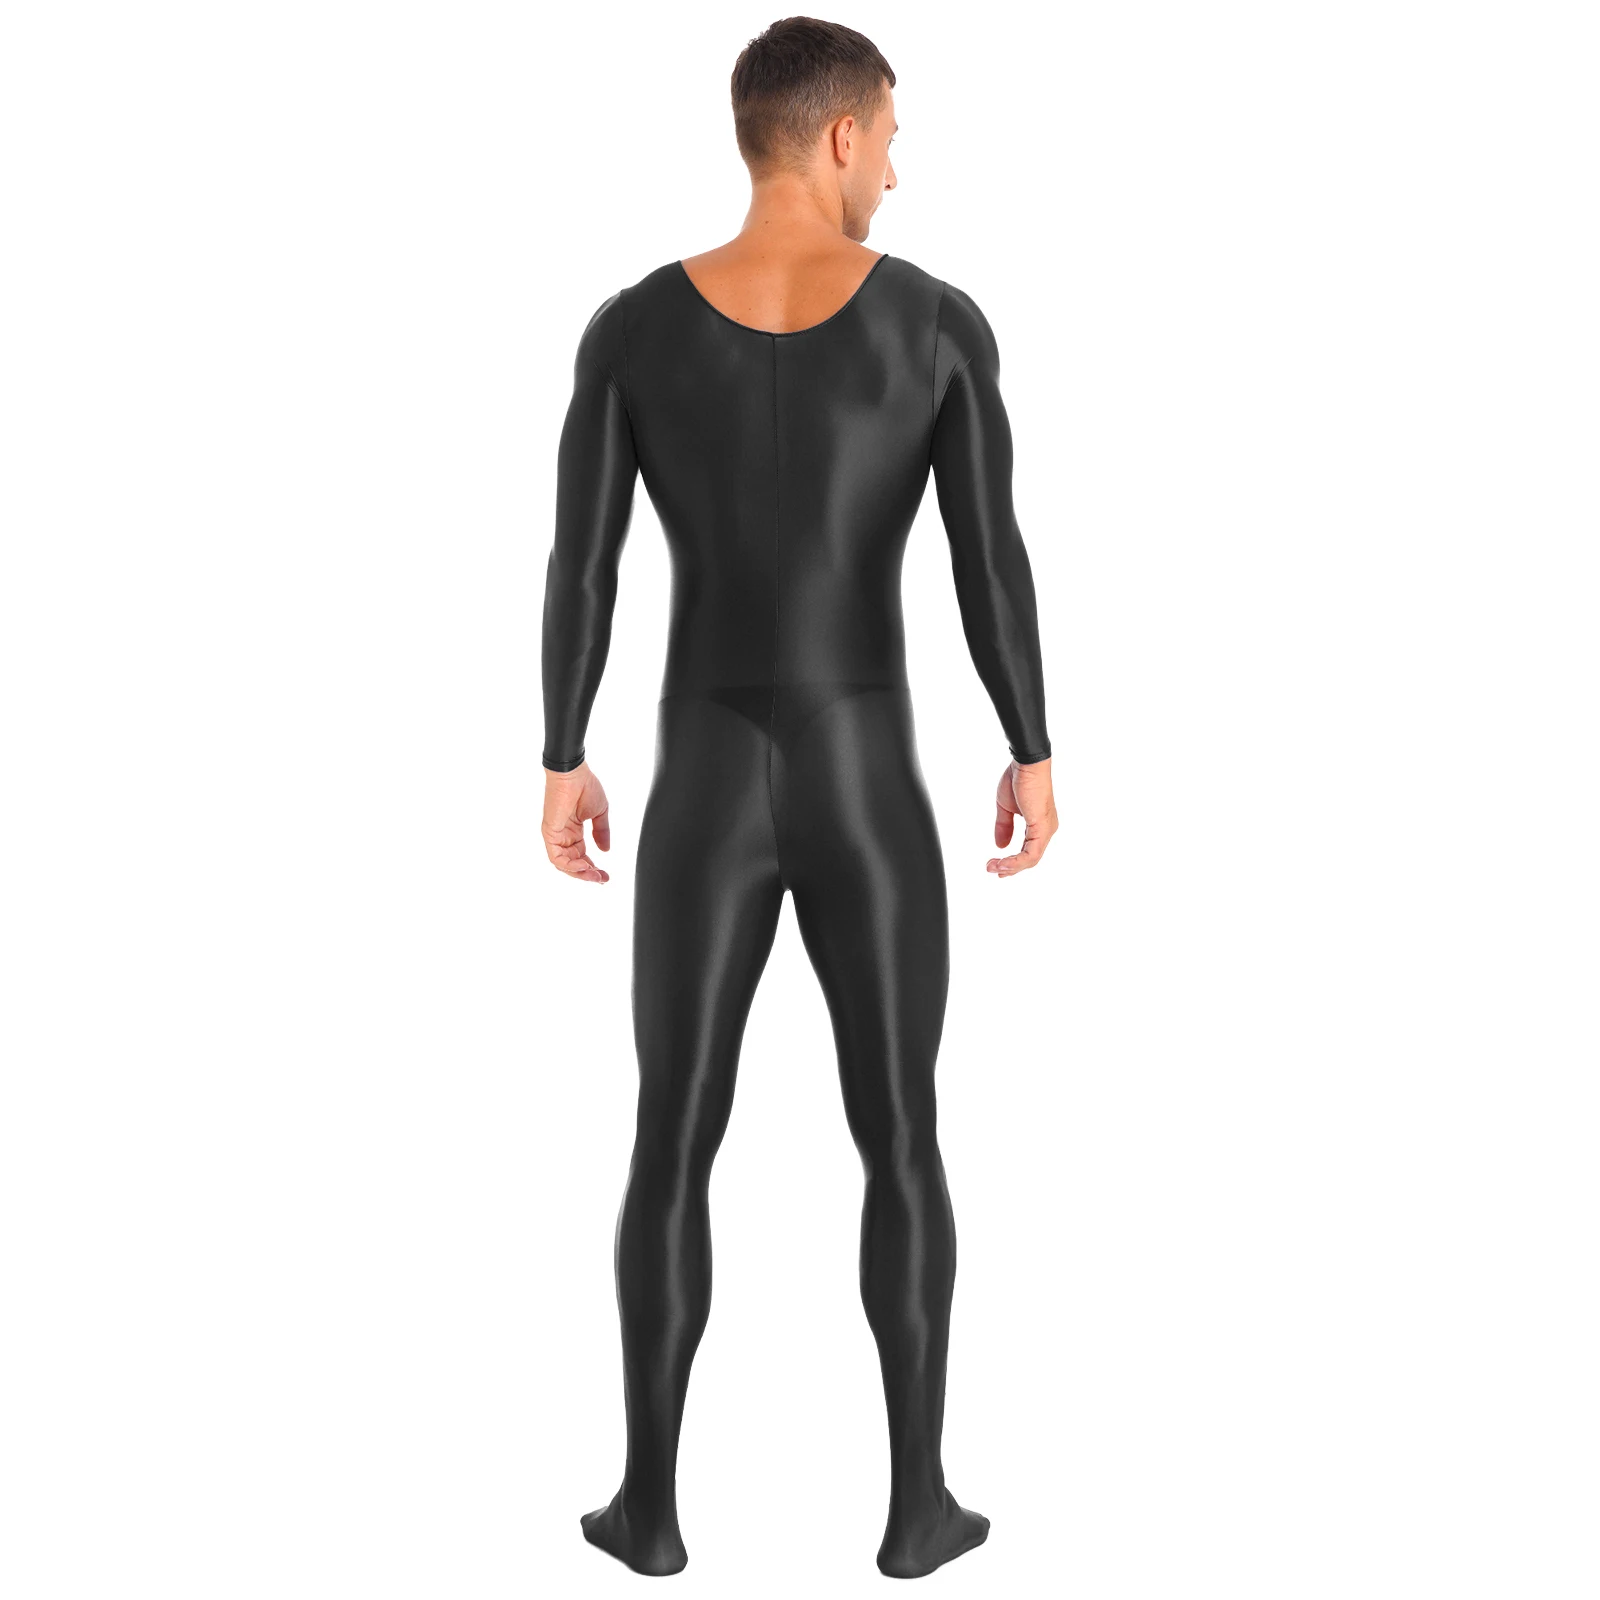 Men Glossy Bodystocking Smooth Long Sleeve Oil Shiny Full Body Bodysuit Tights Swimsuit Gym Fitness Rash Guard Swimwear Jumpsuit